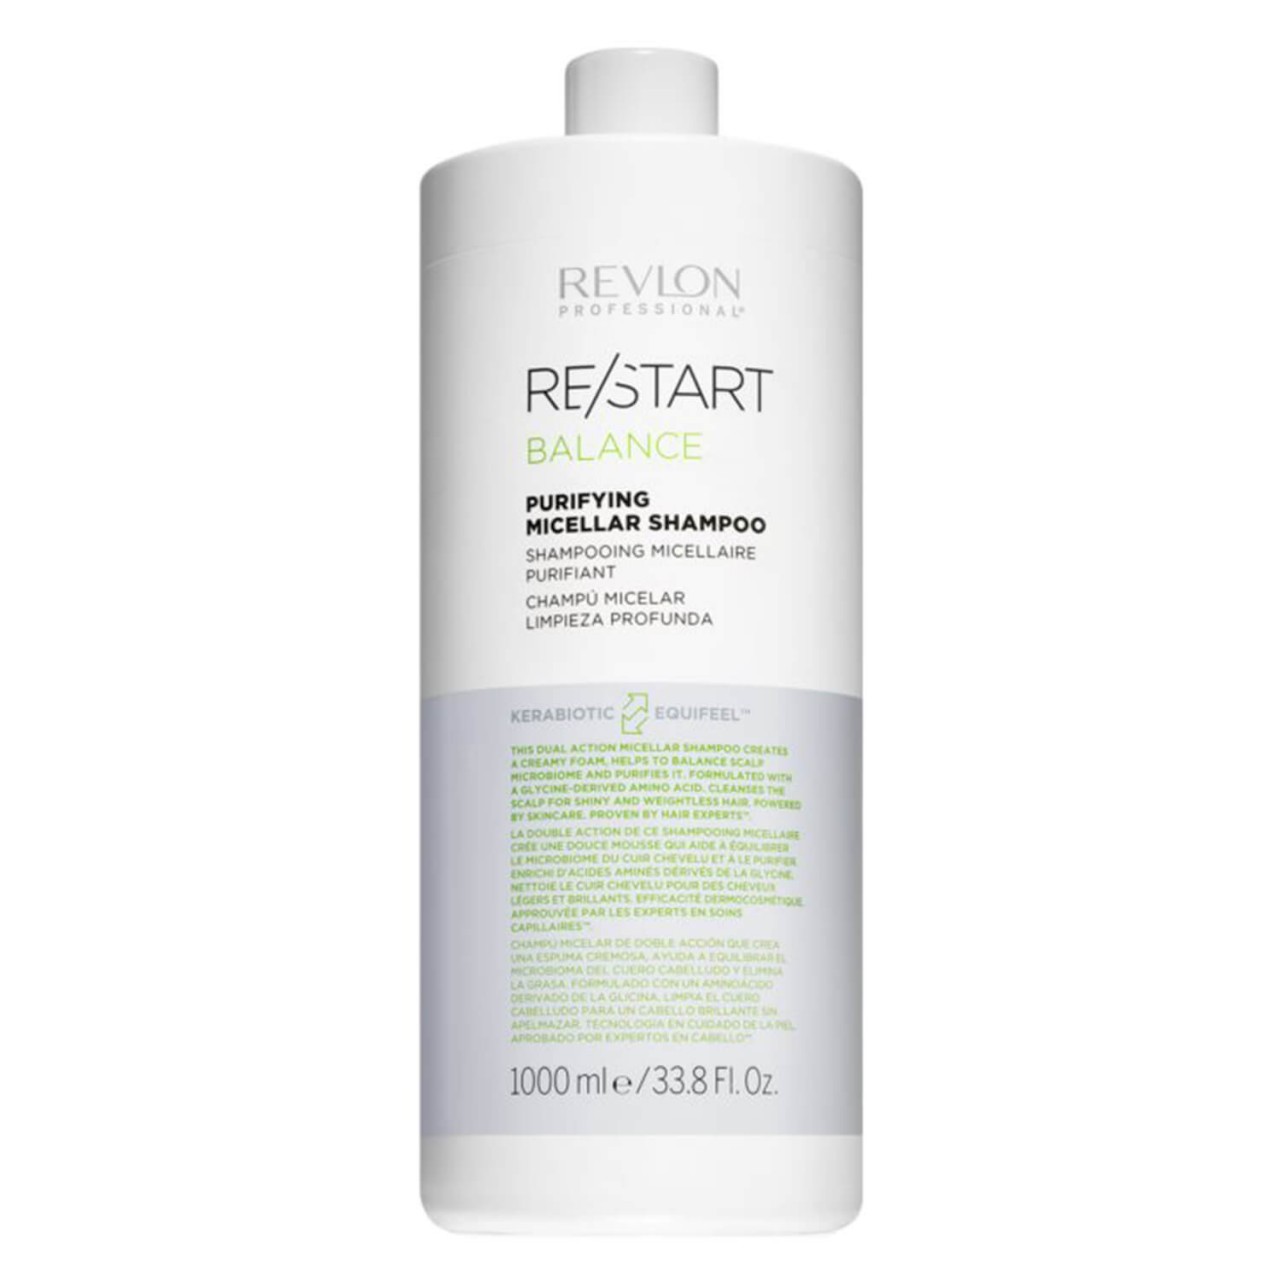 RE/START BALANCE - Purifying Micellar Shampoo von Revlon Professional